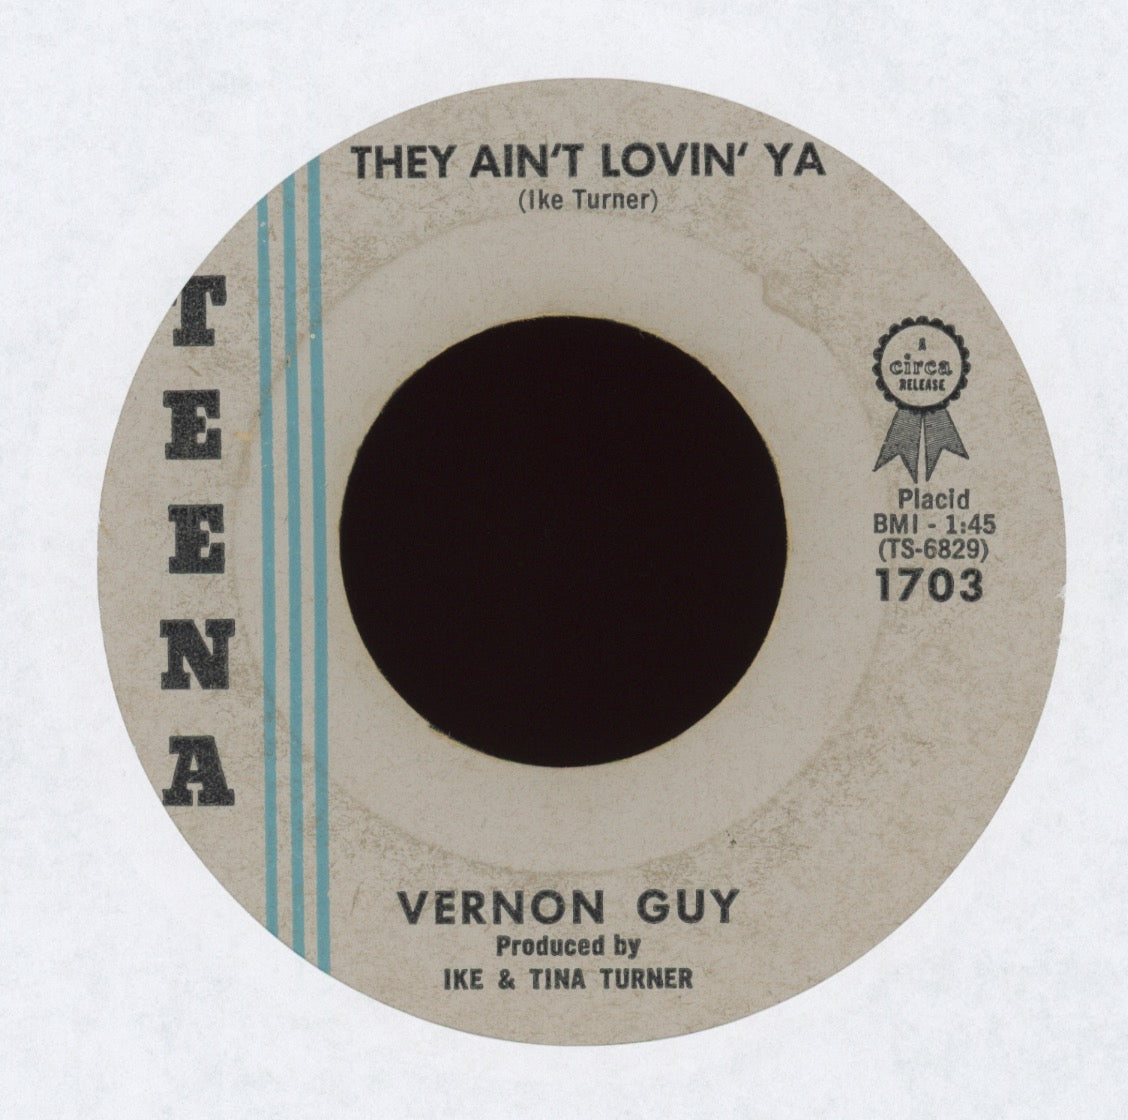 Vernon Guy - They Ain't Lovin' Ya on Teena